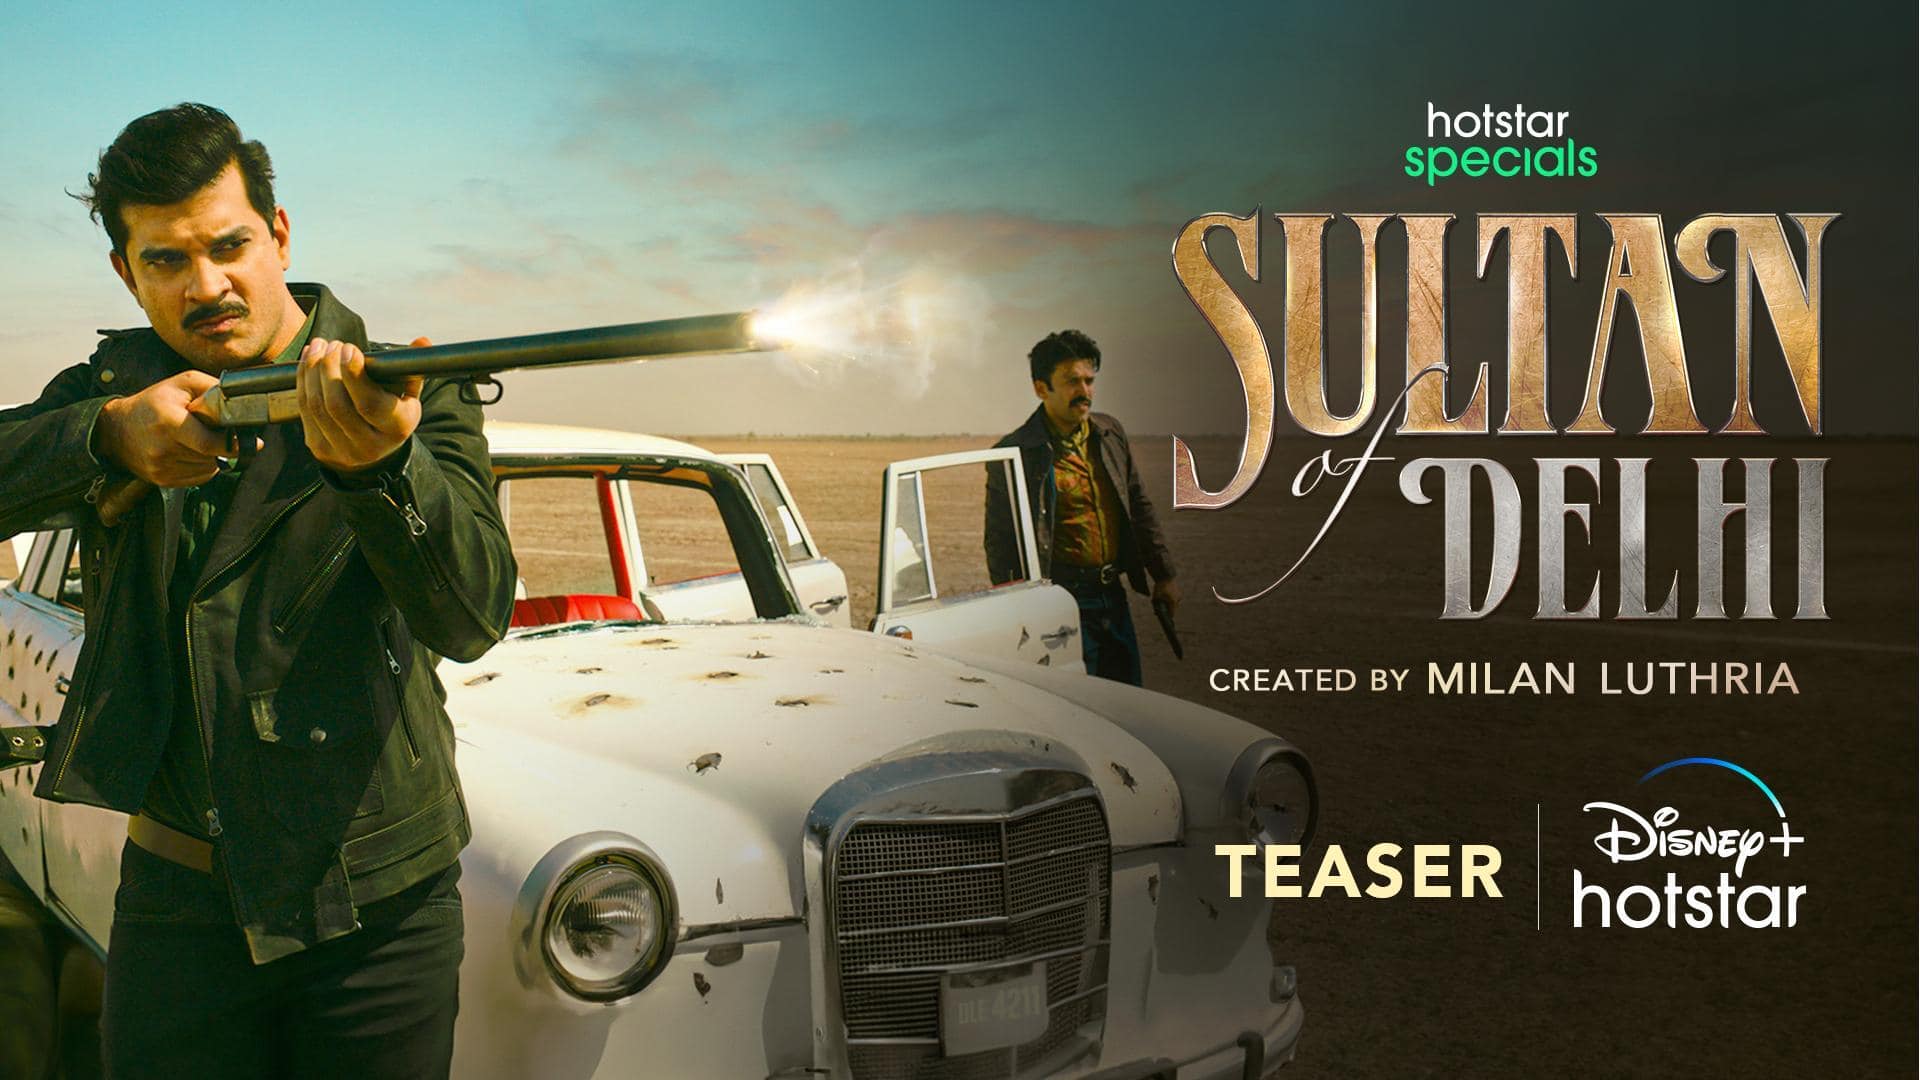 'Sultan of Delhi' releases on Disney+ Hotstar on October 13